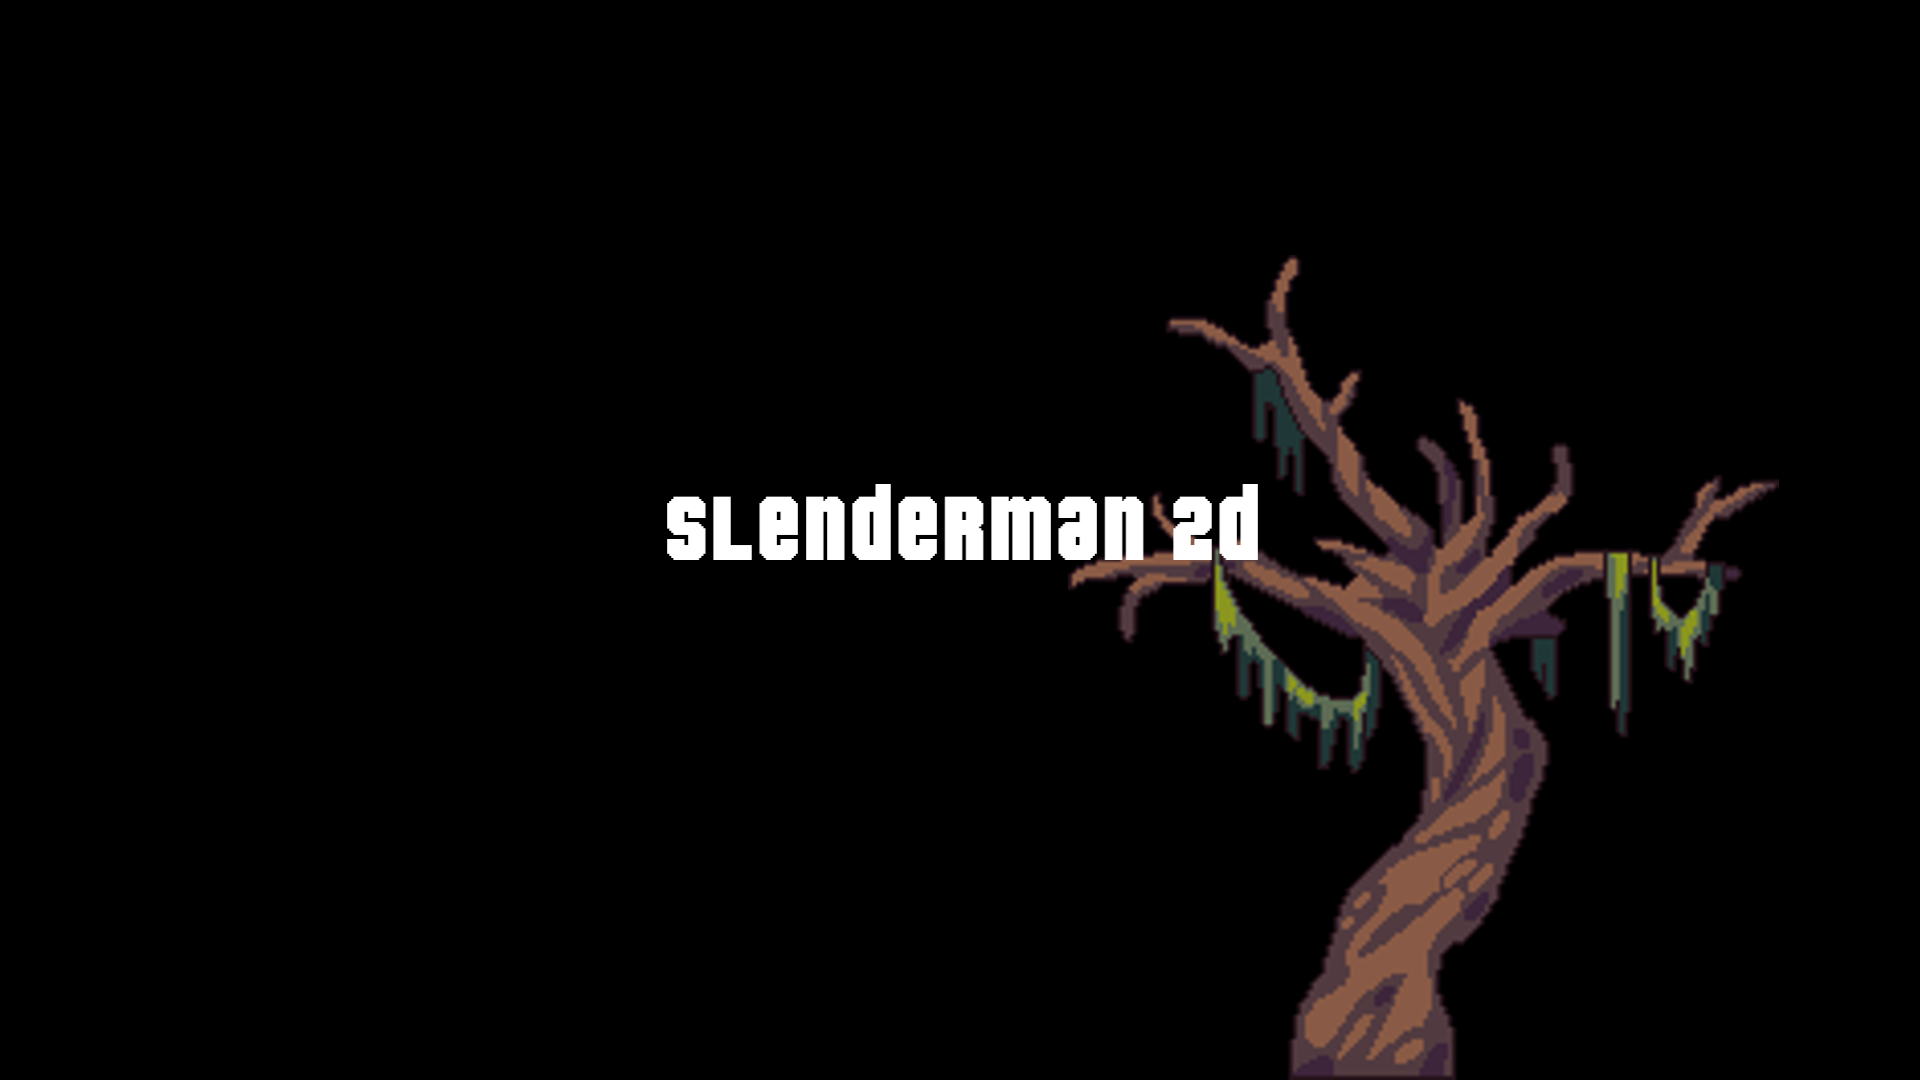 Slenderman2D